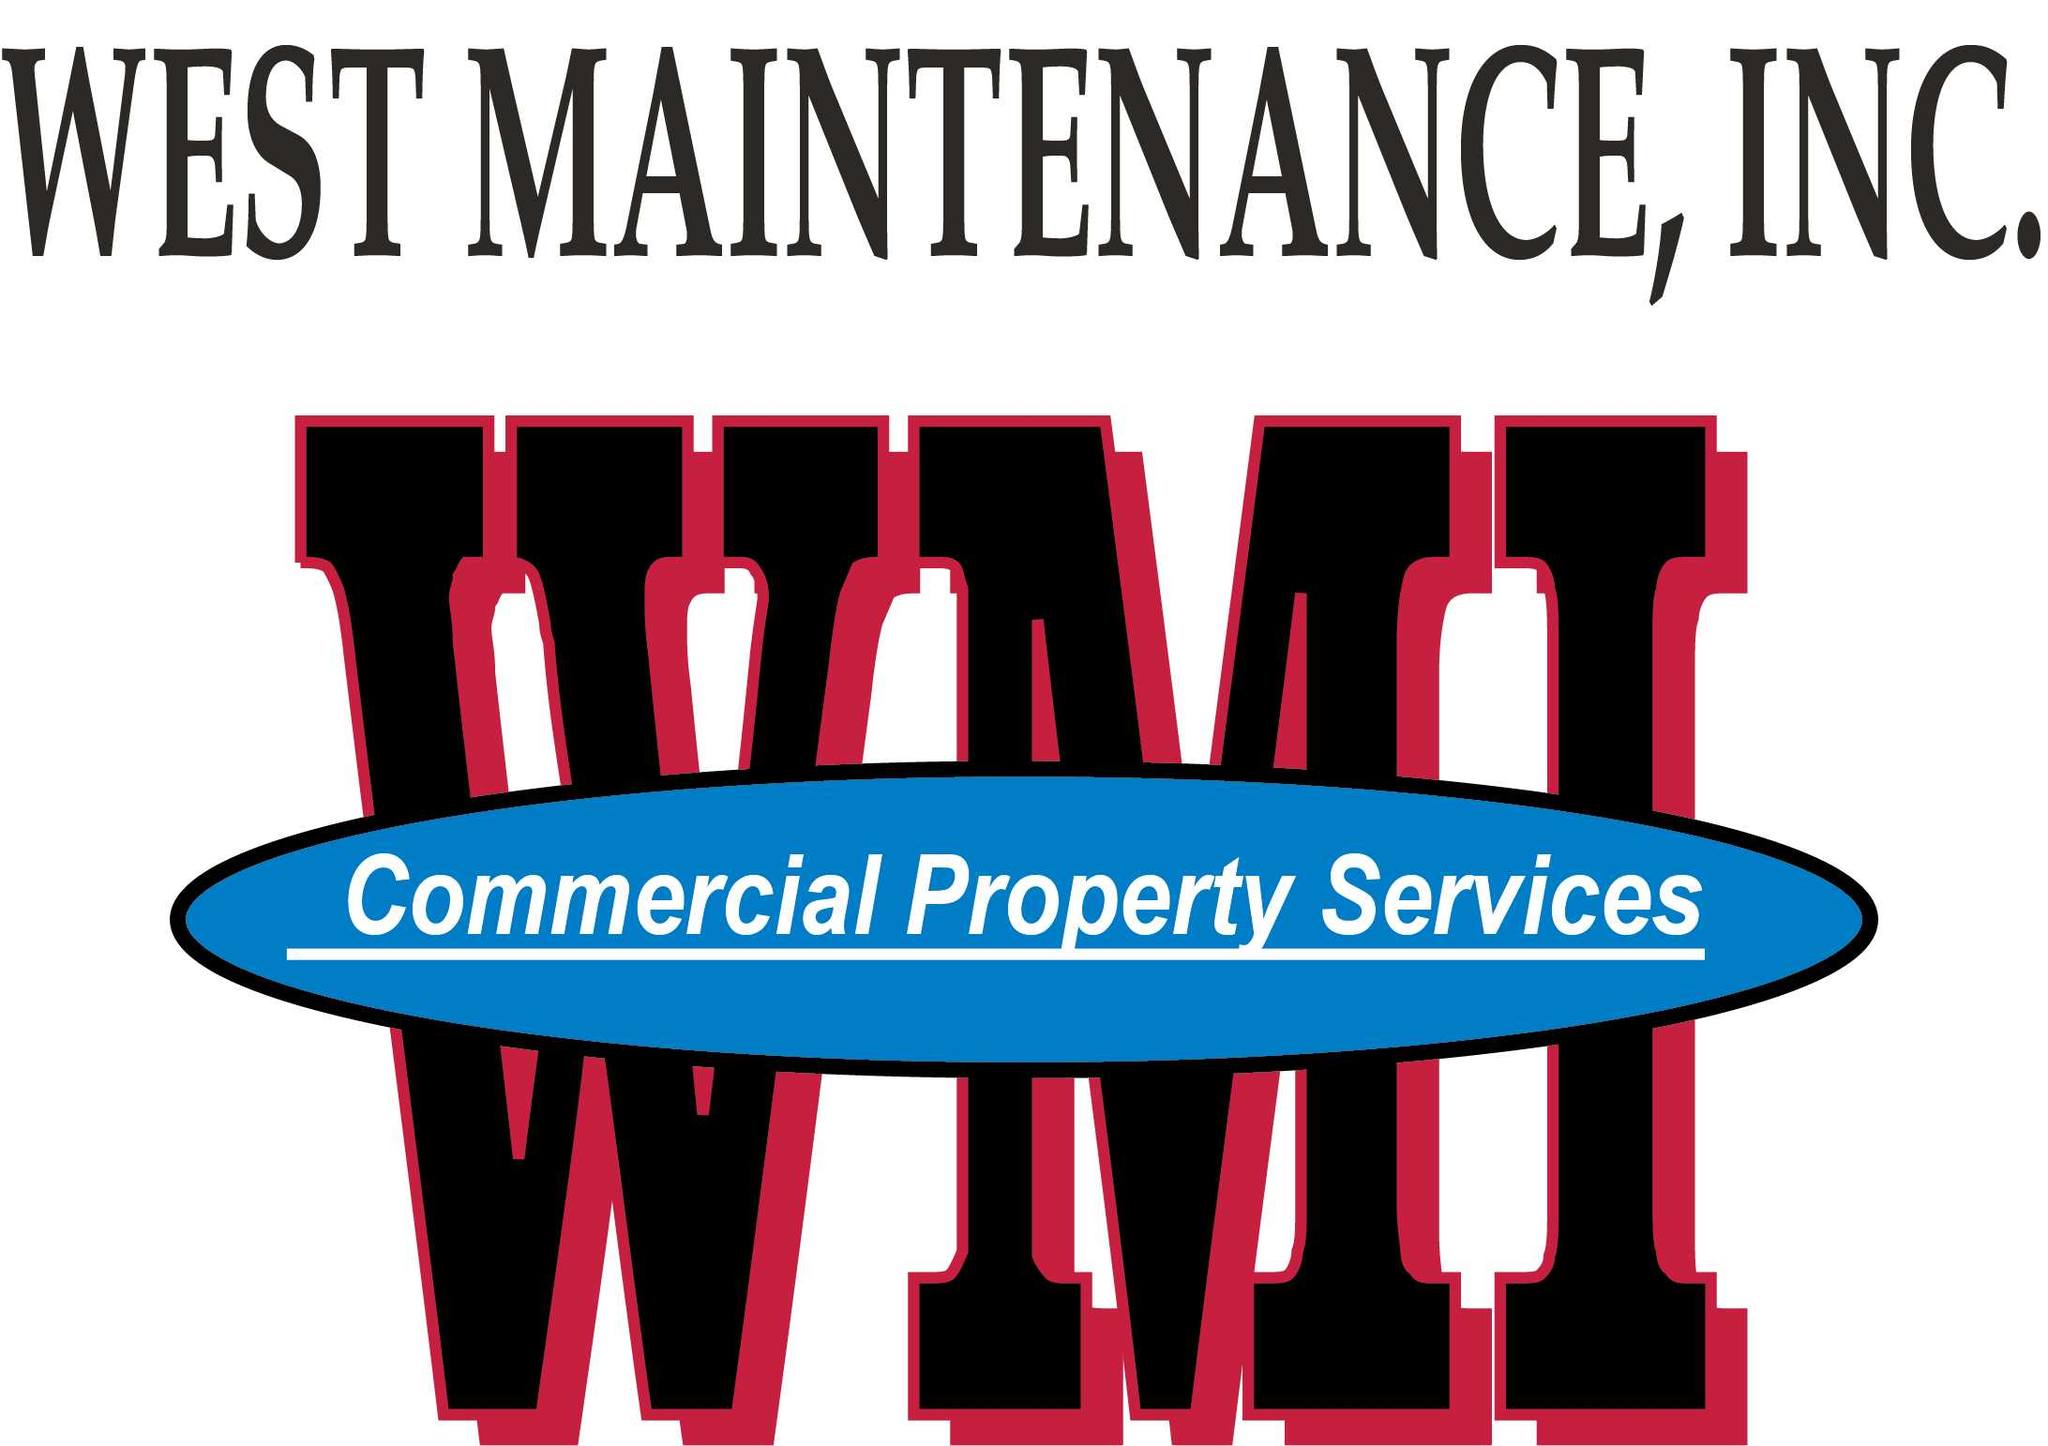 West Maintenance, Inc 4235 Kennedy Dr Ste 2, East Moline Illinois 61244